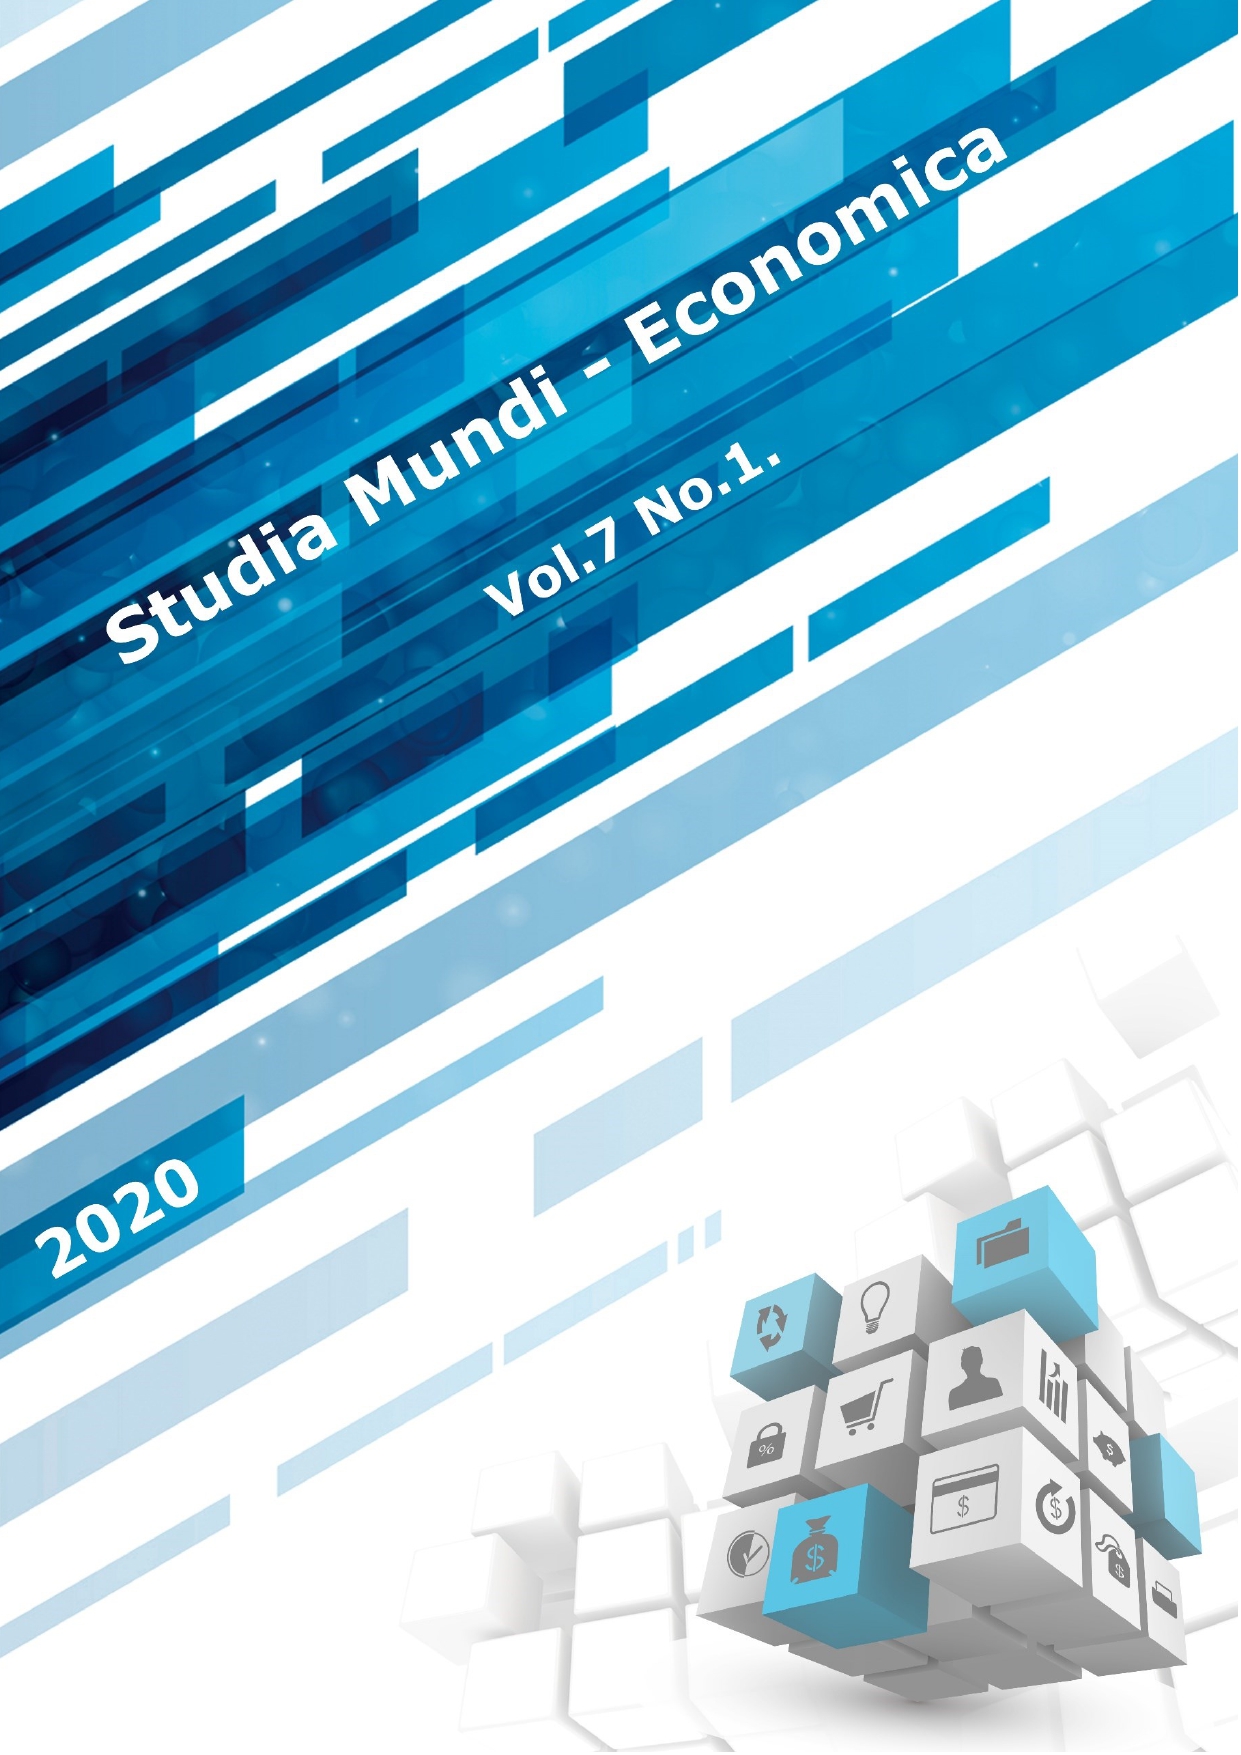 					View Évf. 7 szám 1 (2020): Studia Mundi – Economica
				